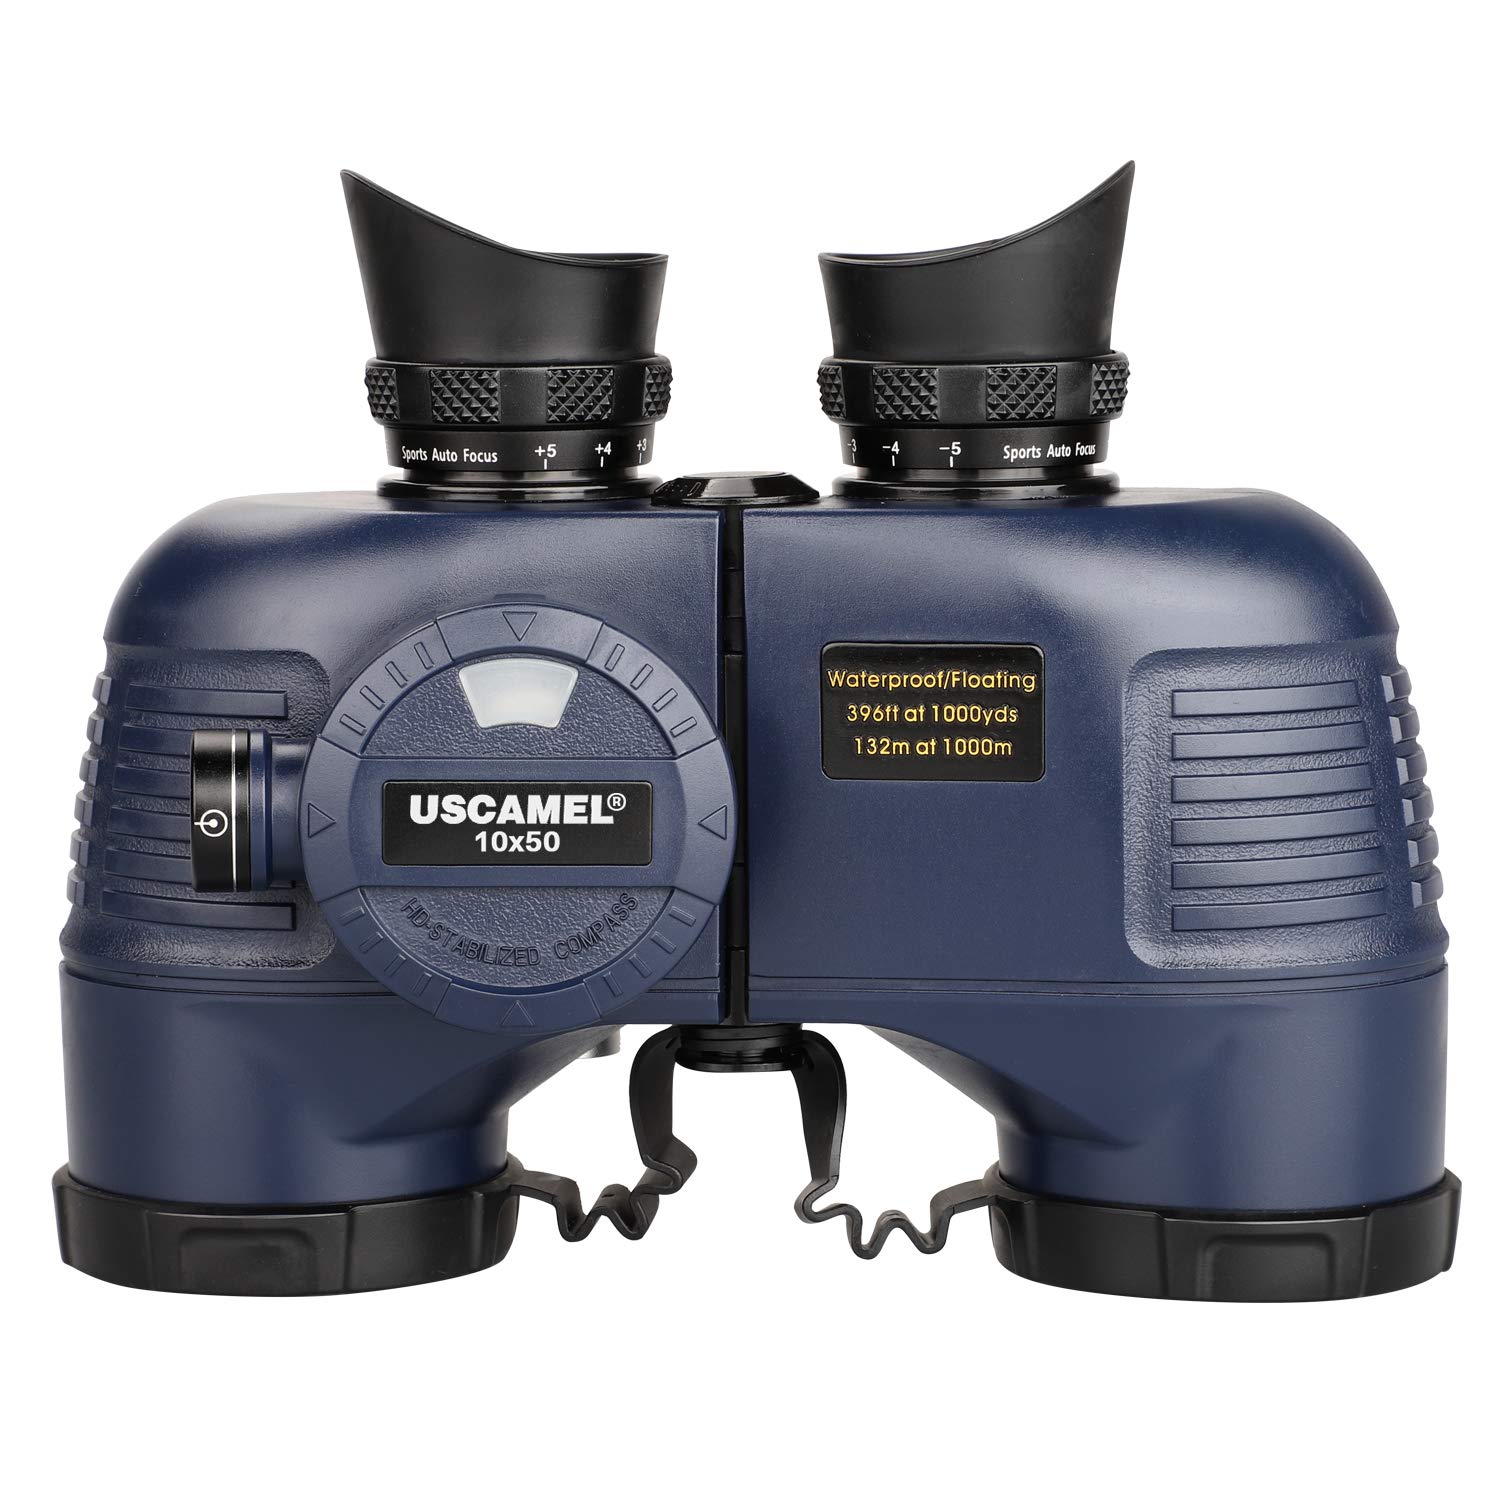 USCAMEL 10x50 Marine Binoculars